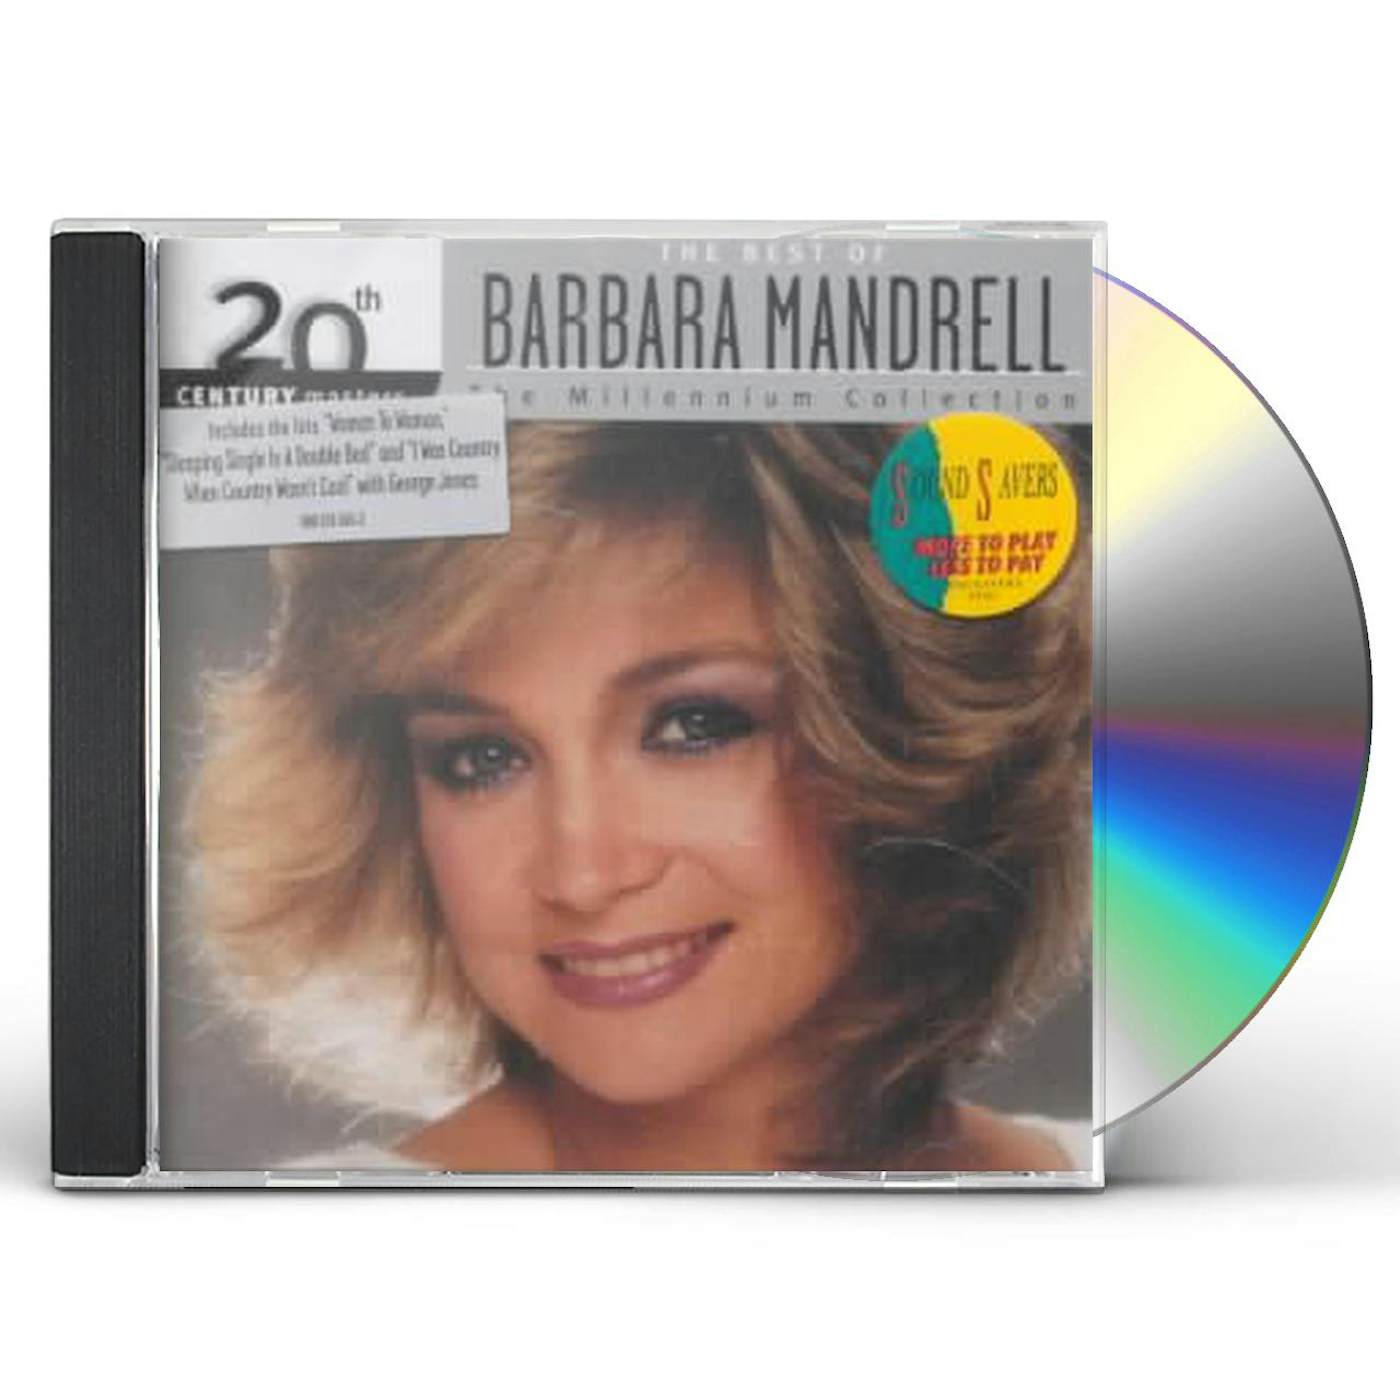 Barbara Mandrell 20TH CENTURY MASTERS: MILLENNIUM COLLECTION CD